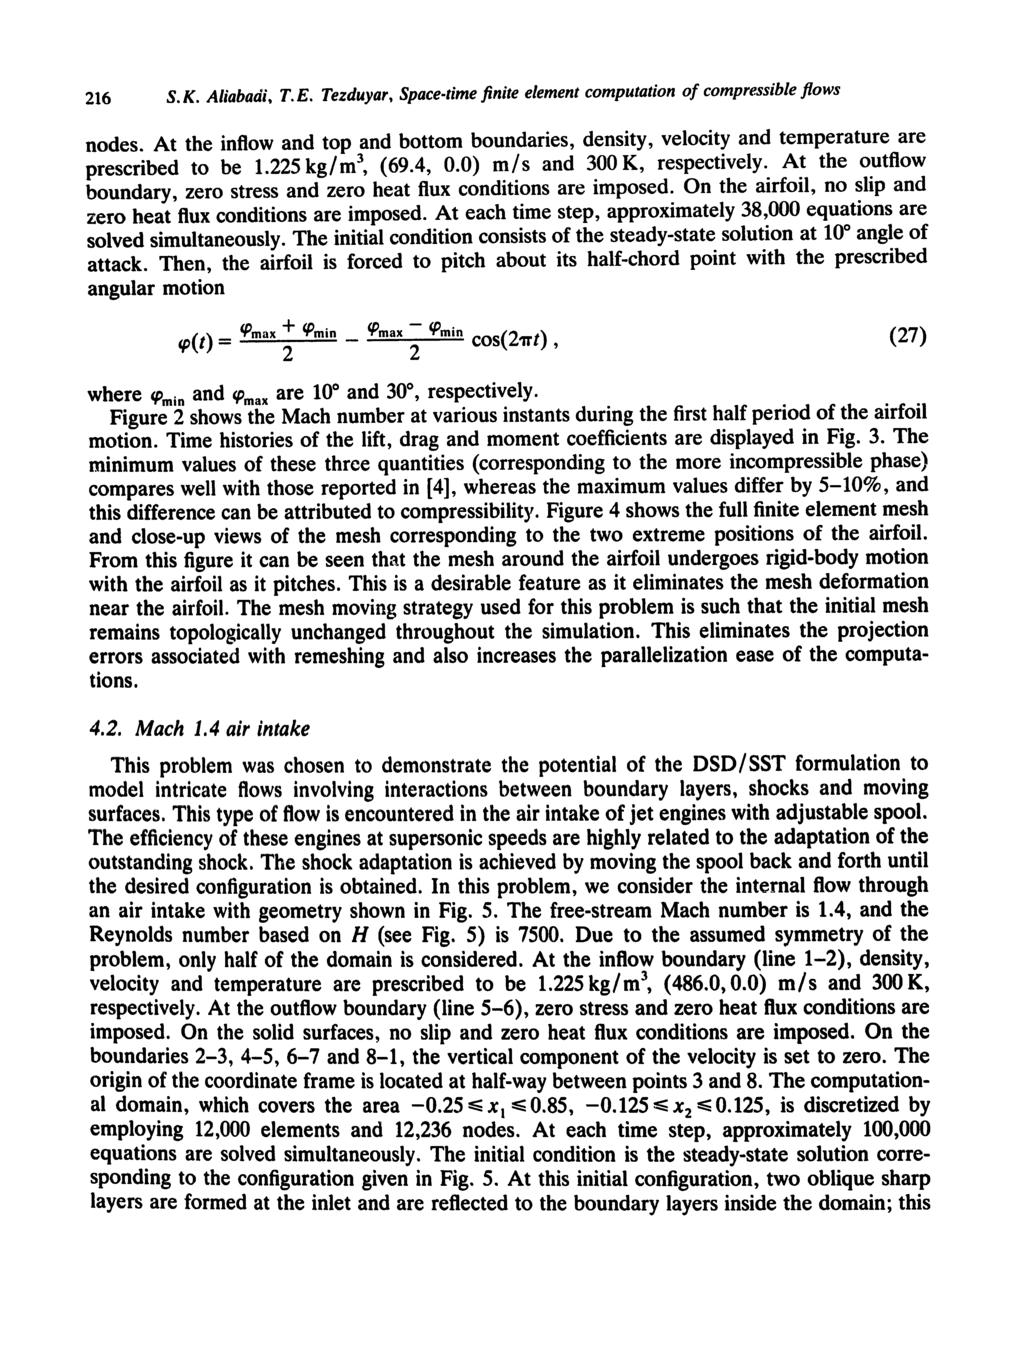 216 S.K. Aliabadi, T.E. Tezduyar, Space-time finite element computation of compressible flows nodes.